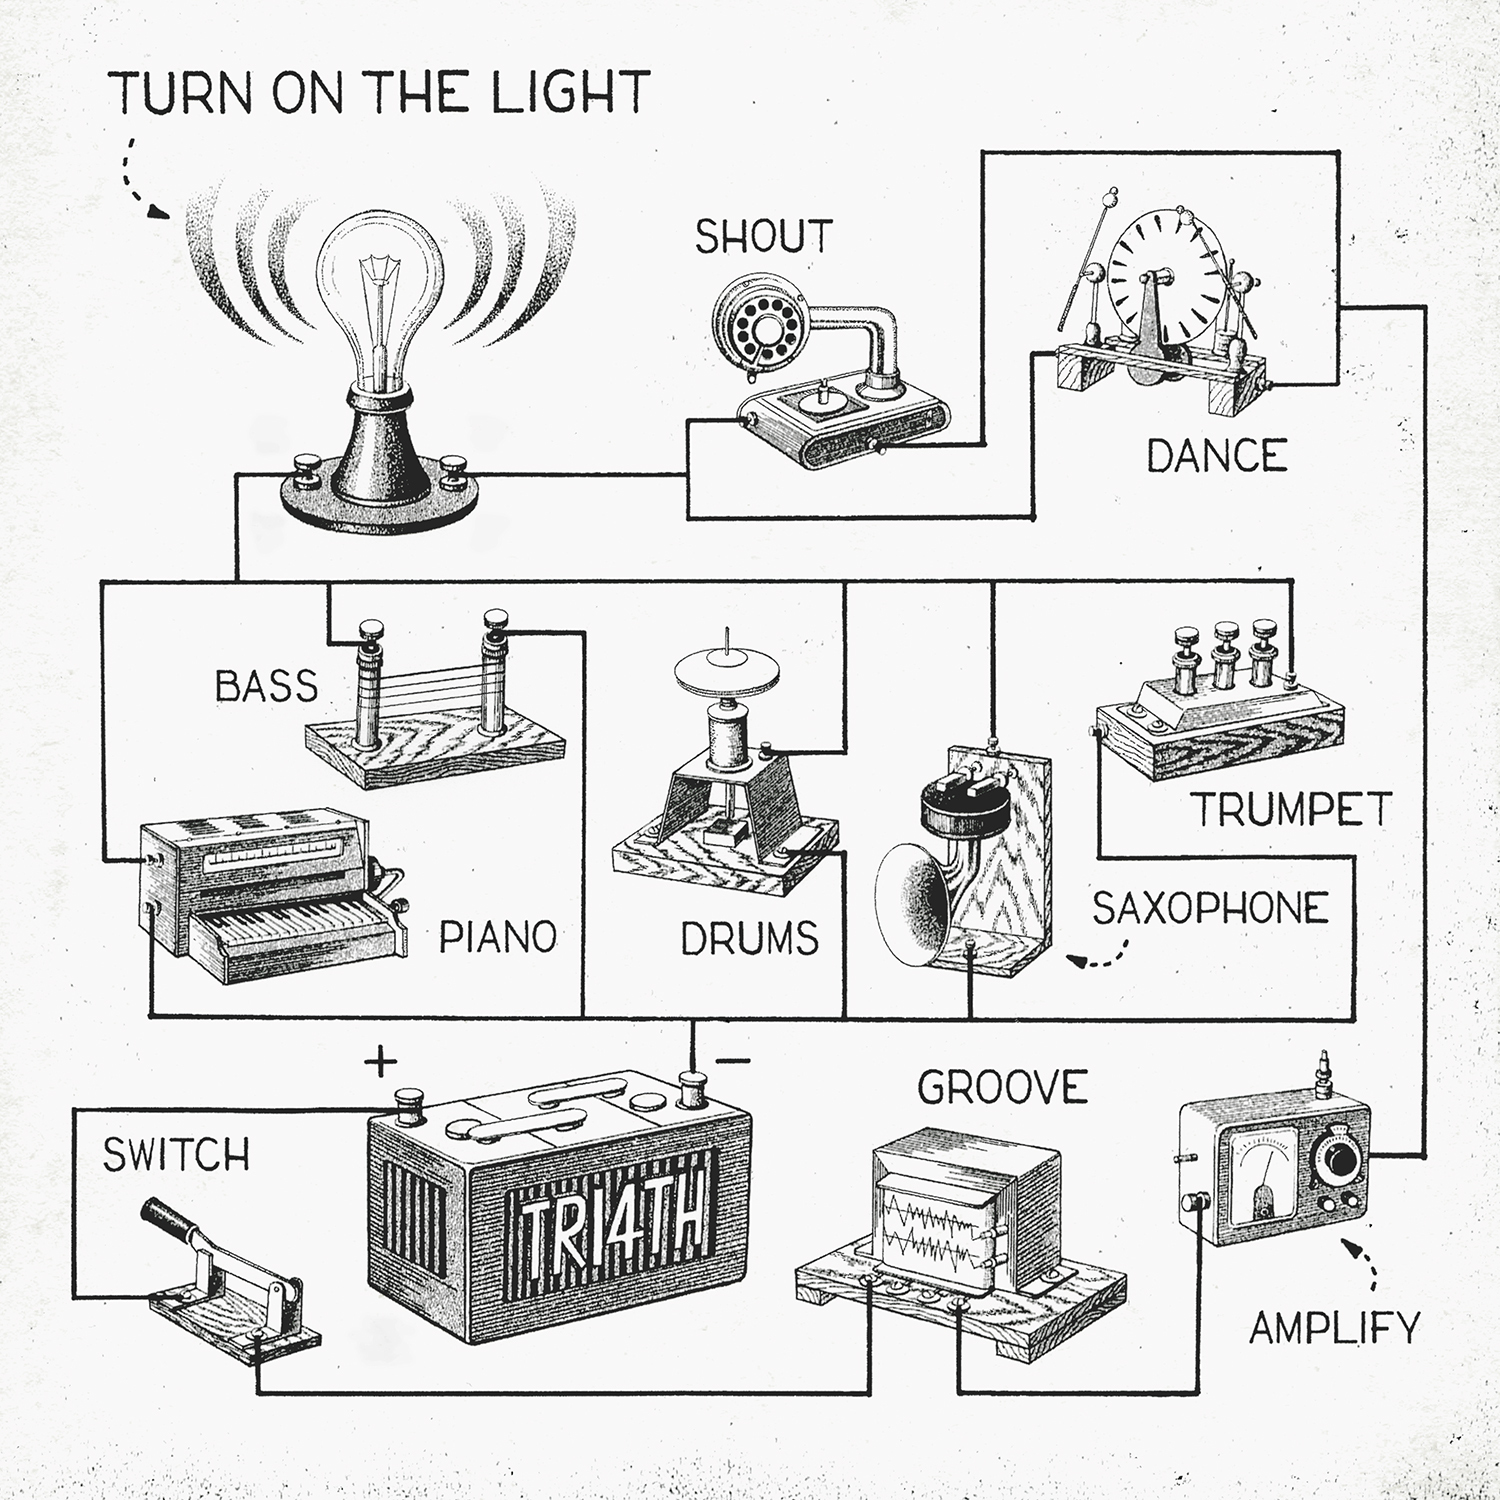 『Turn On The Light』